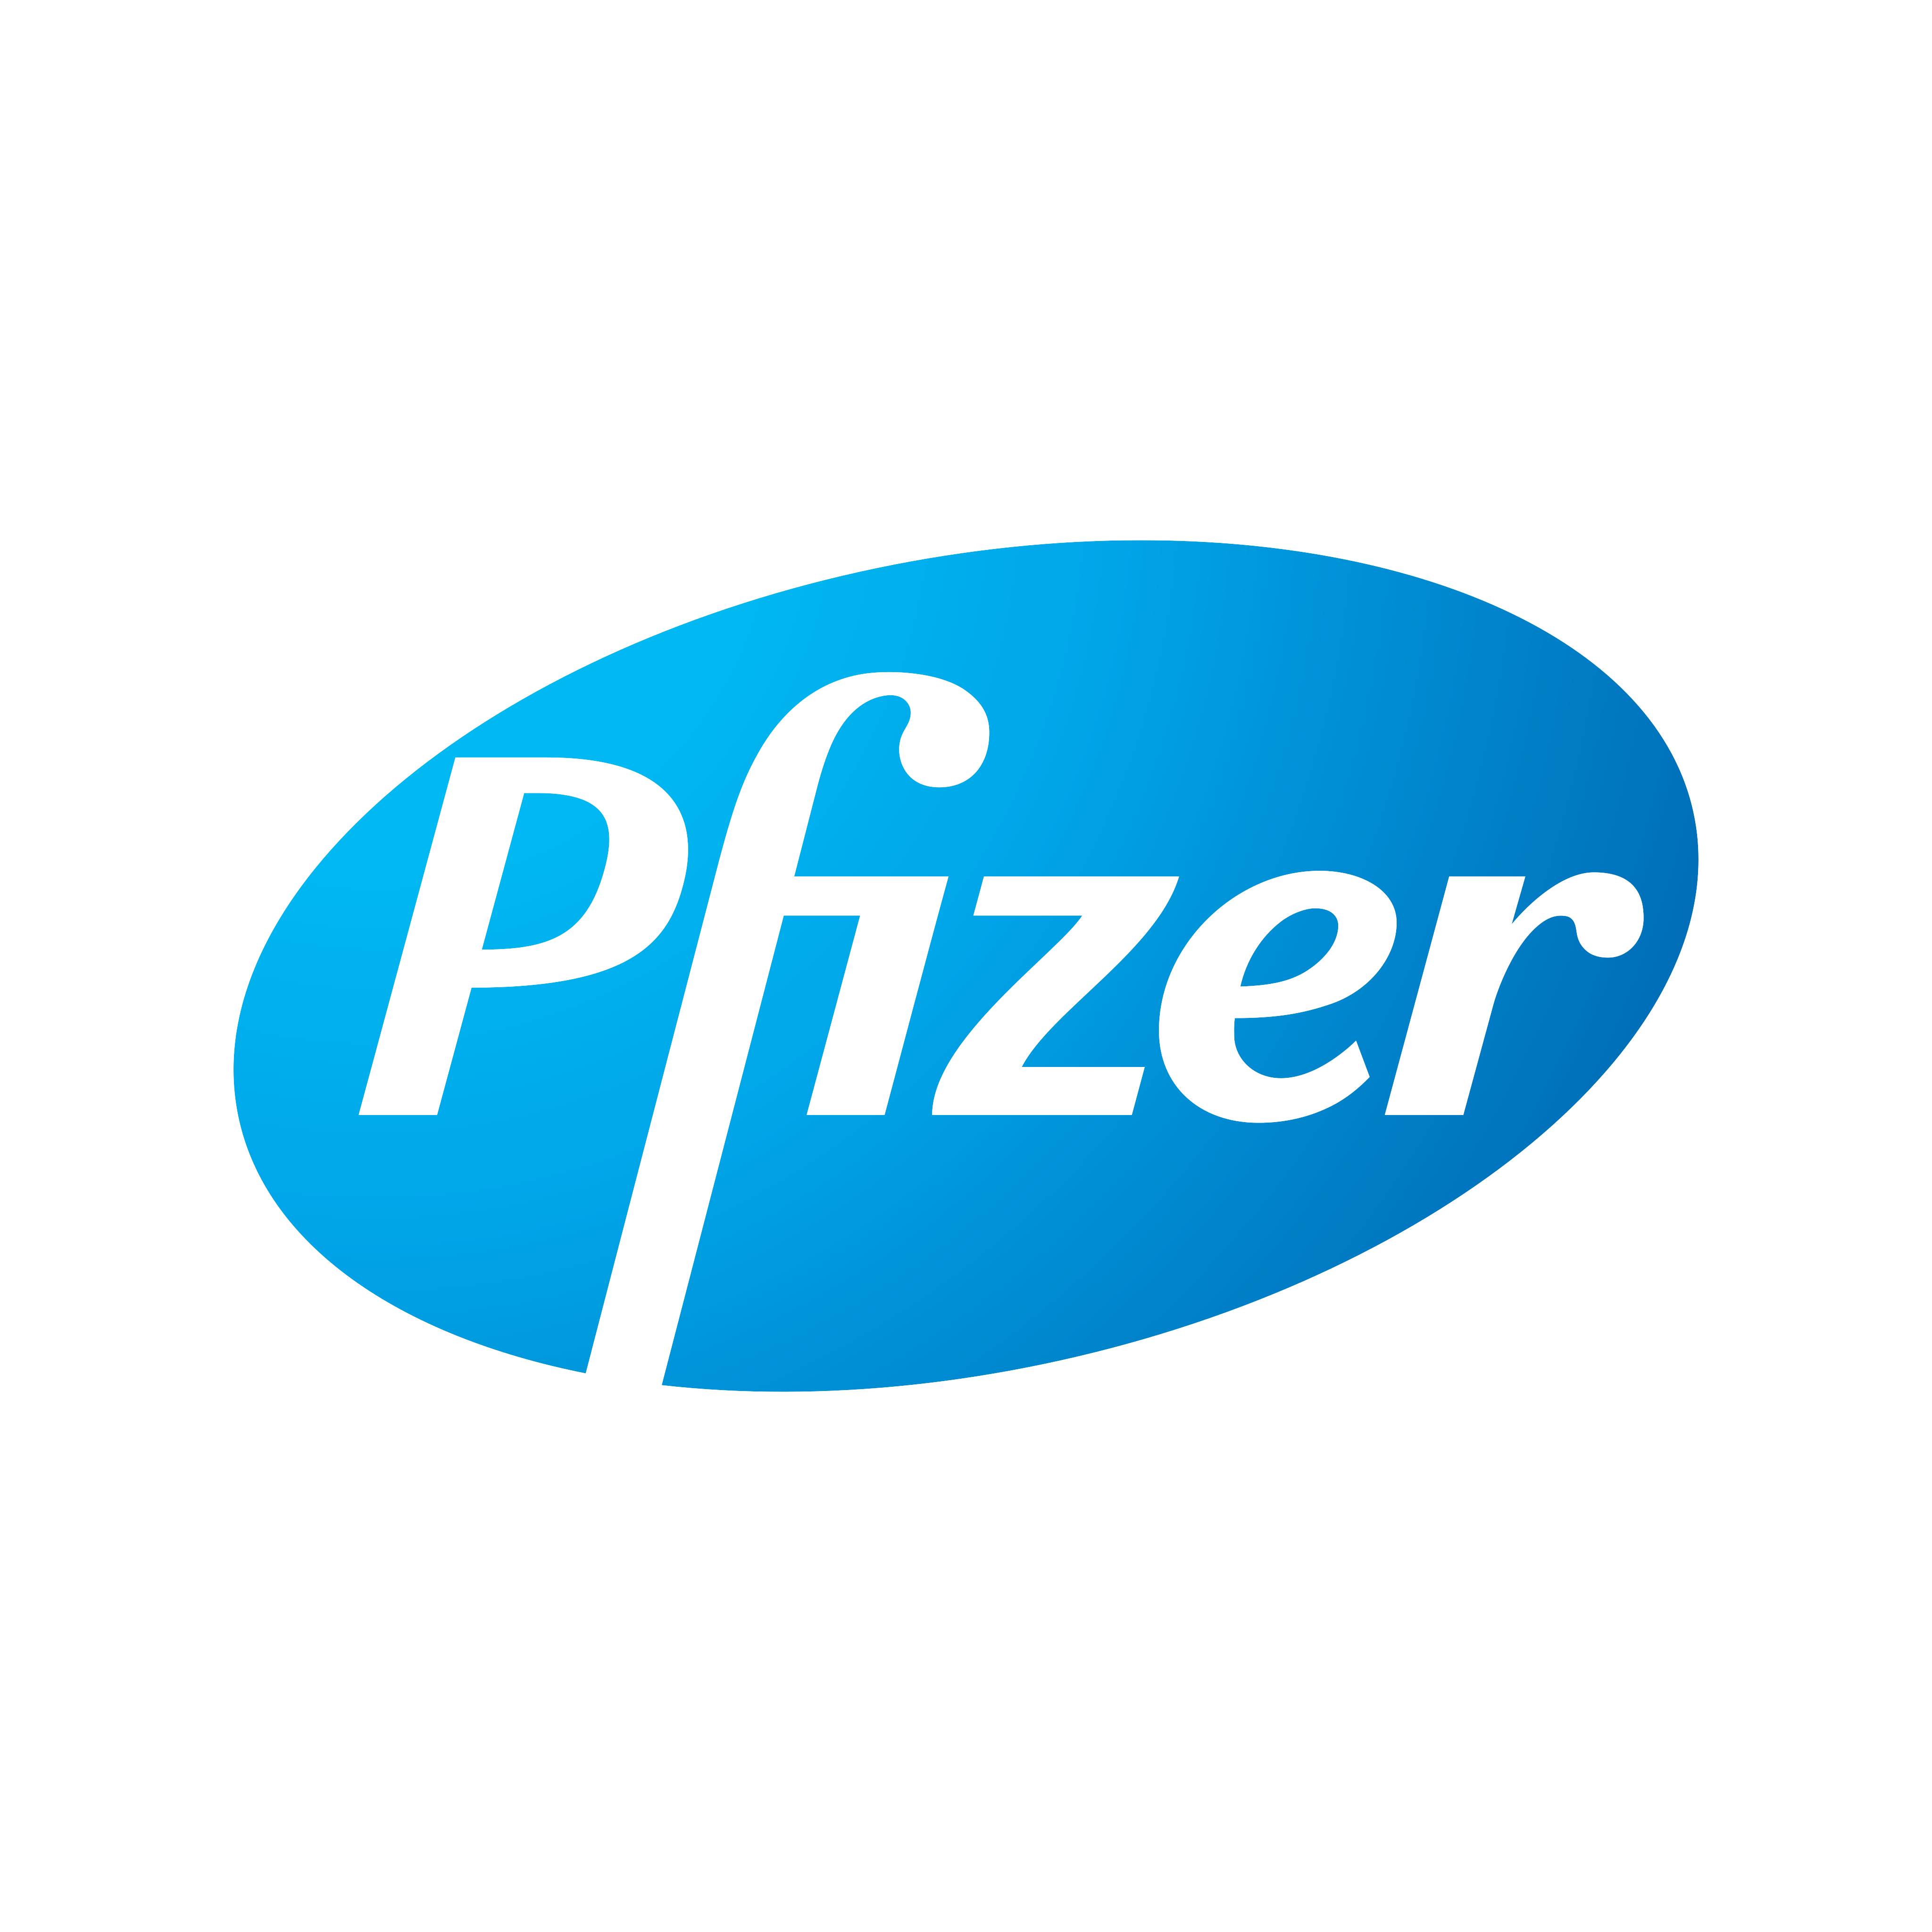 pfizer logo 0 - Pfizer Logo